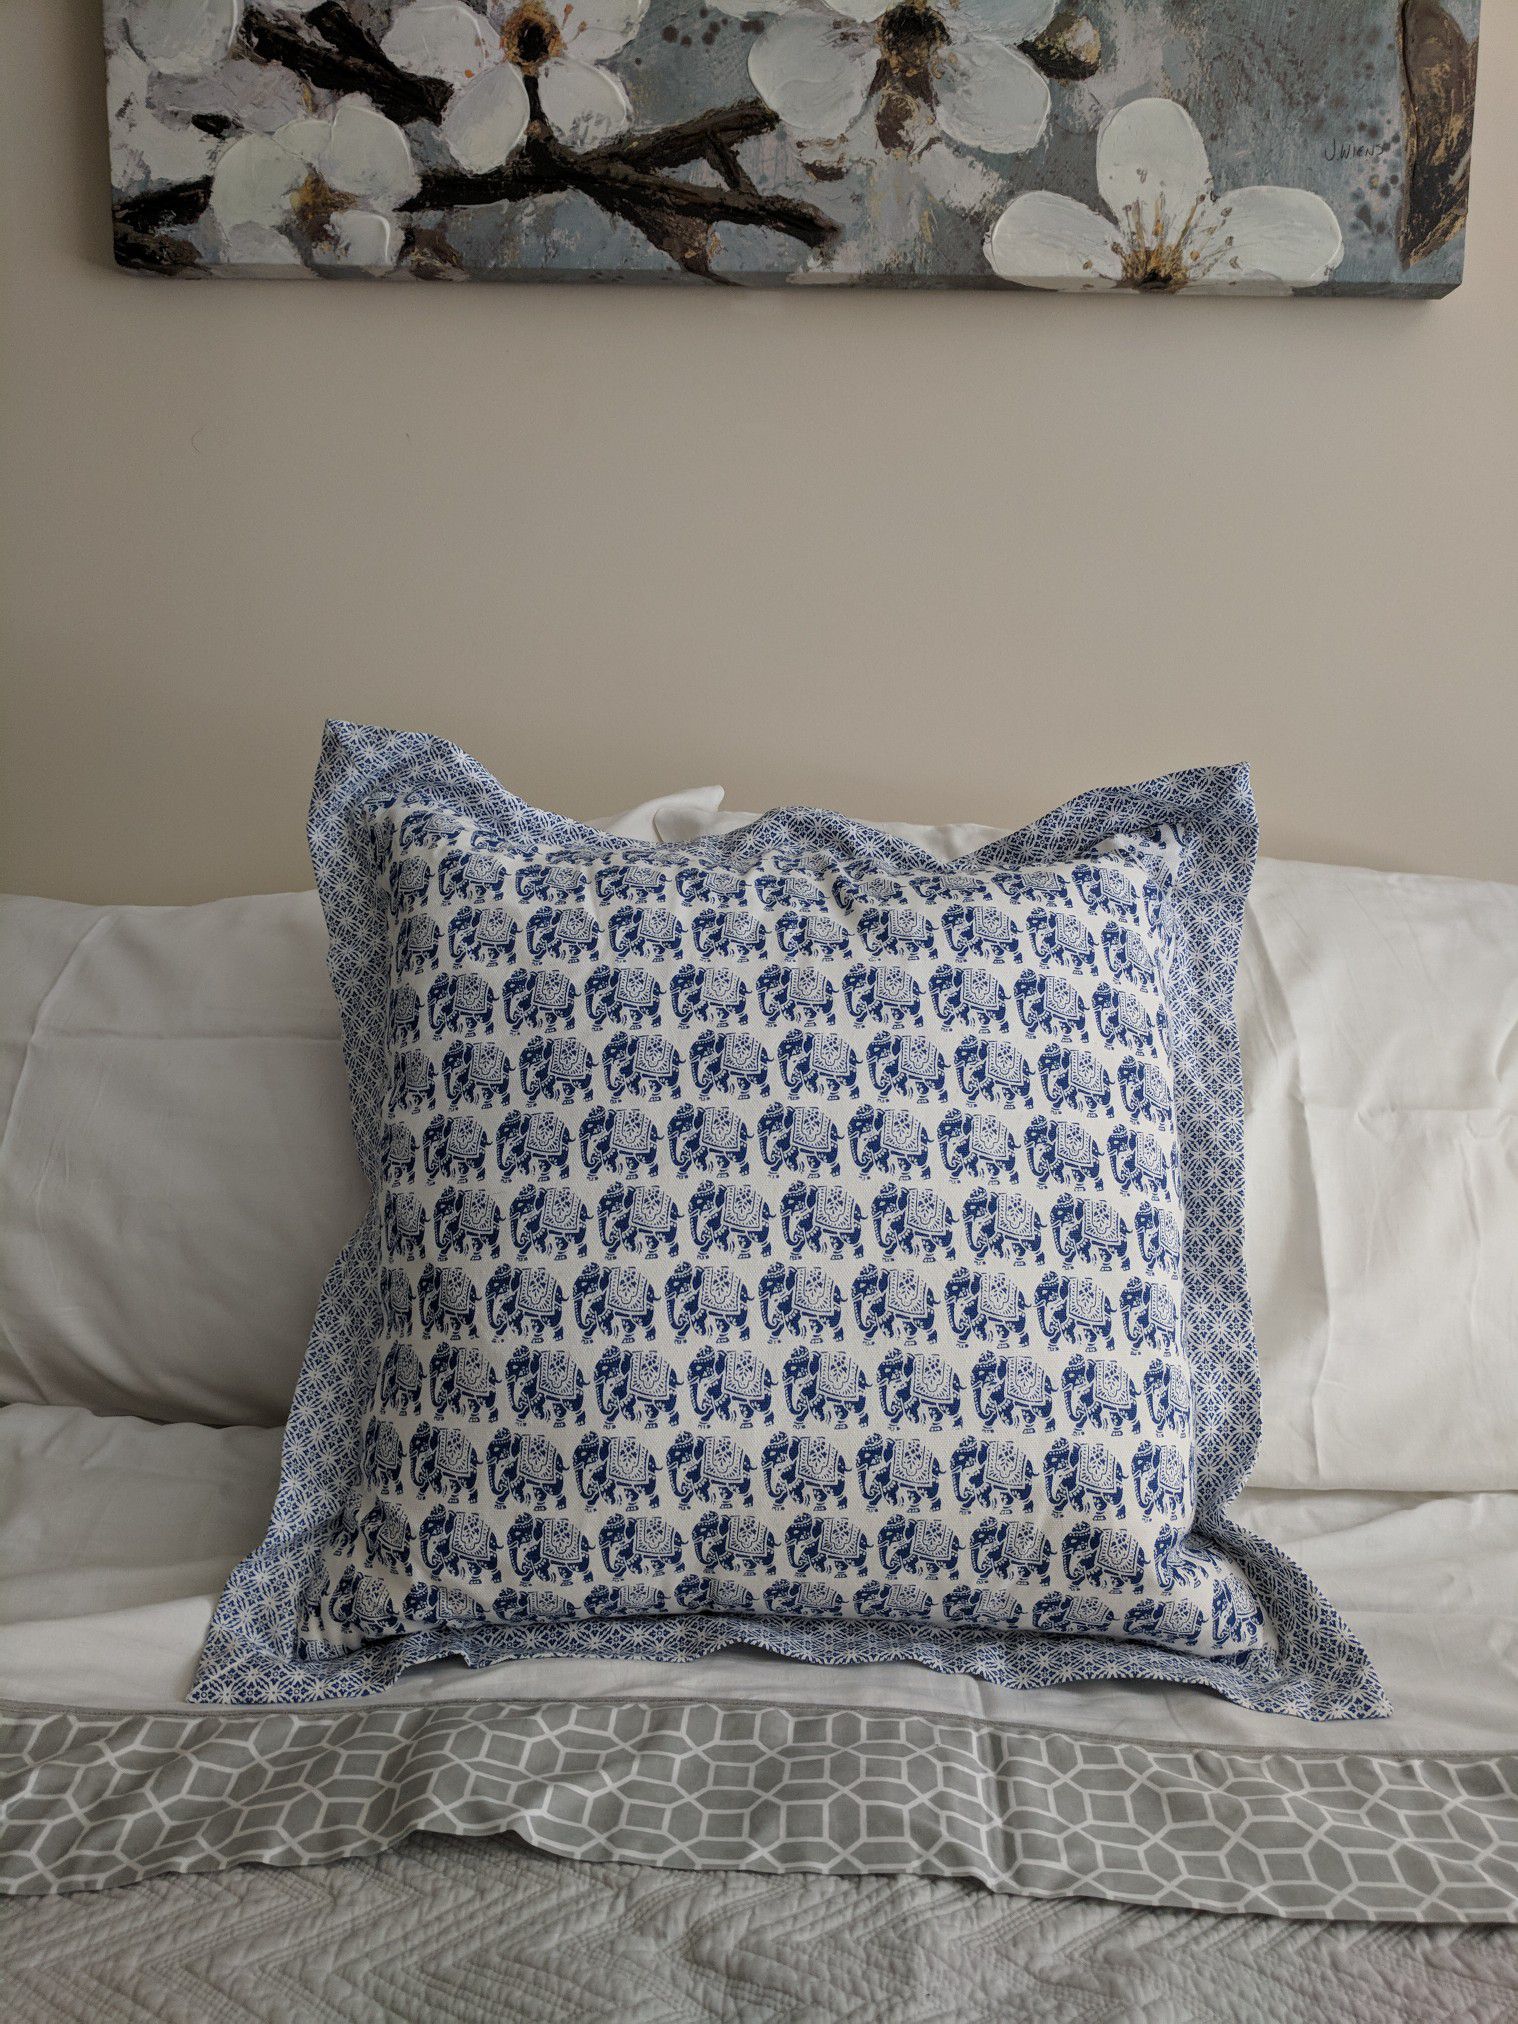 Decorative Elephant Pillow